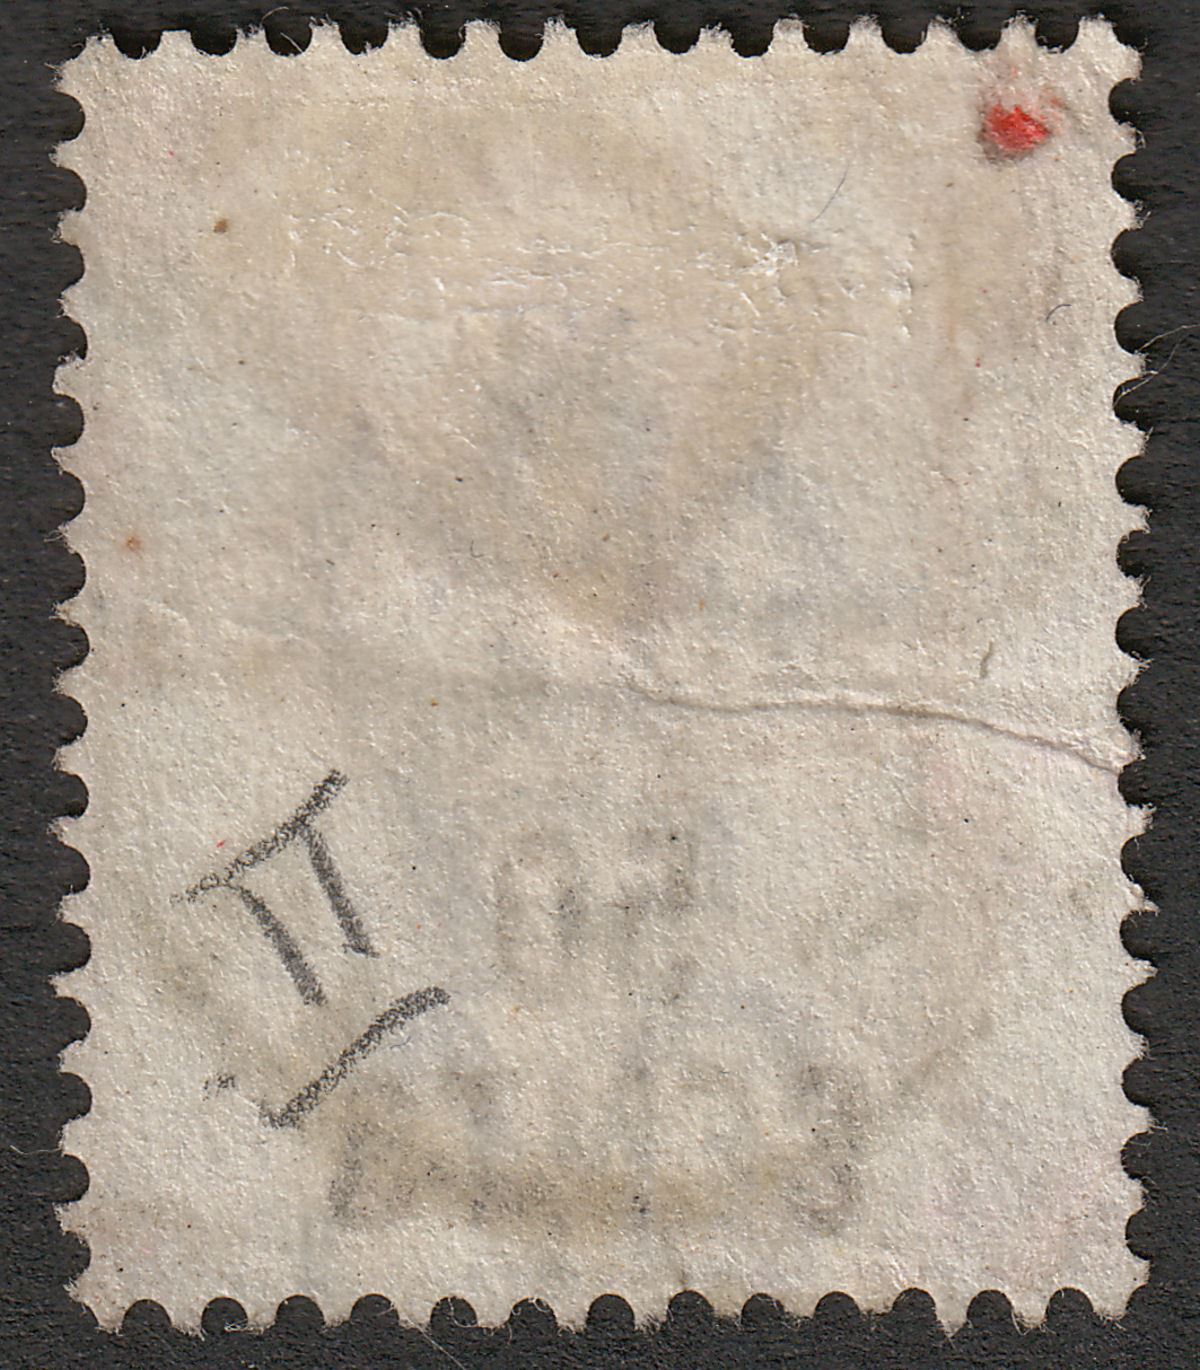 Hong Kong 1899 QV 50c on 48c Used w Peking (2) IPO Mark and Shanghai Postmarks